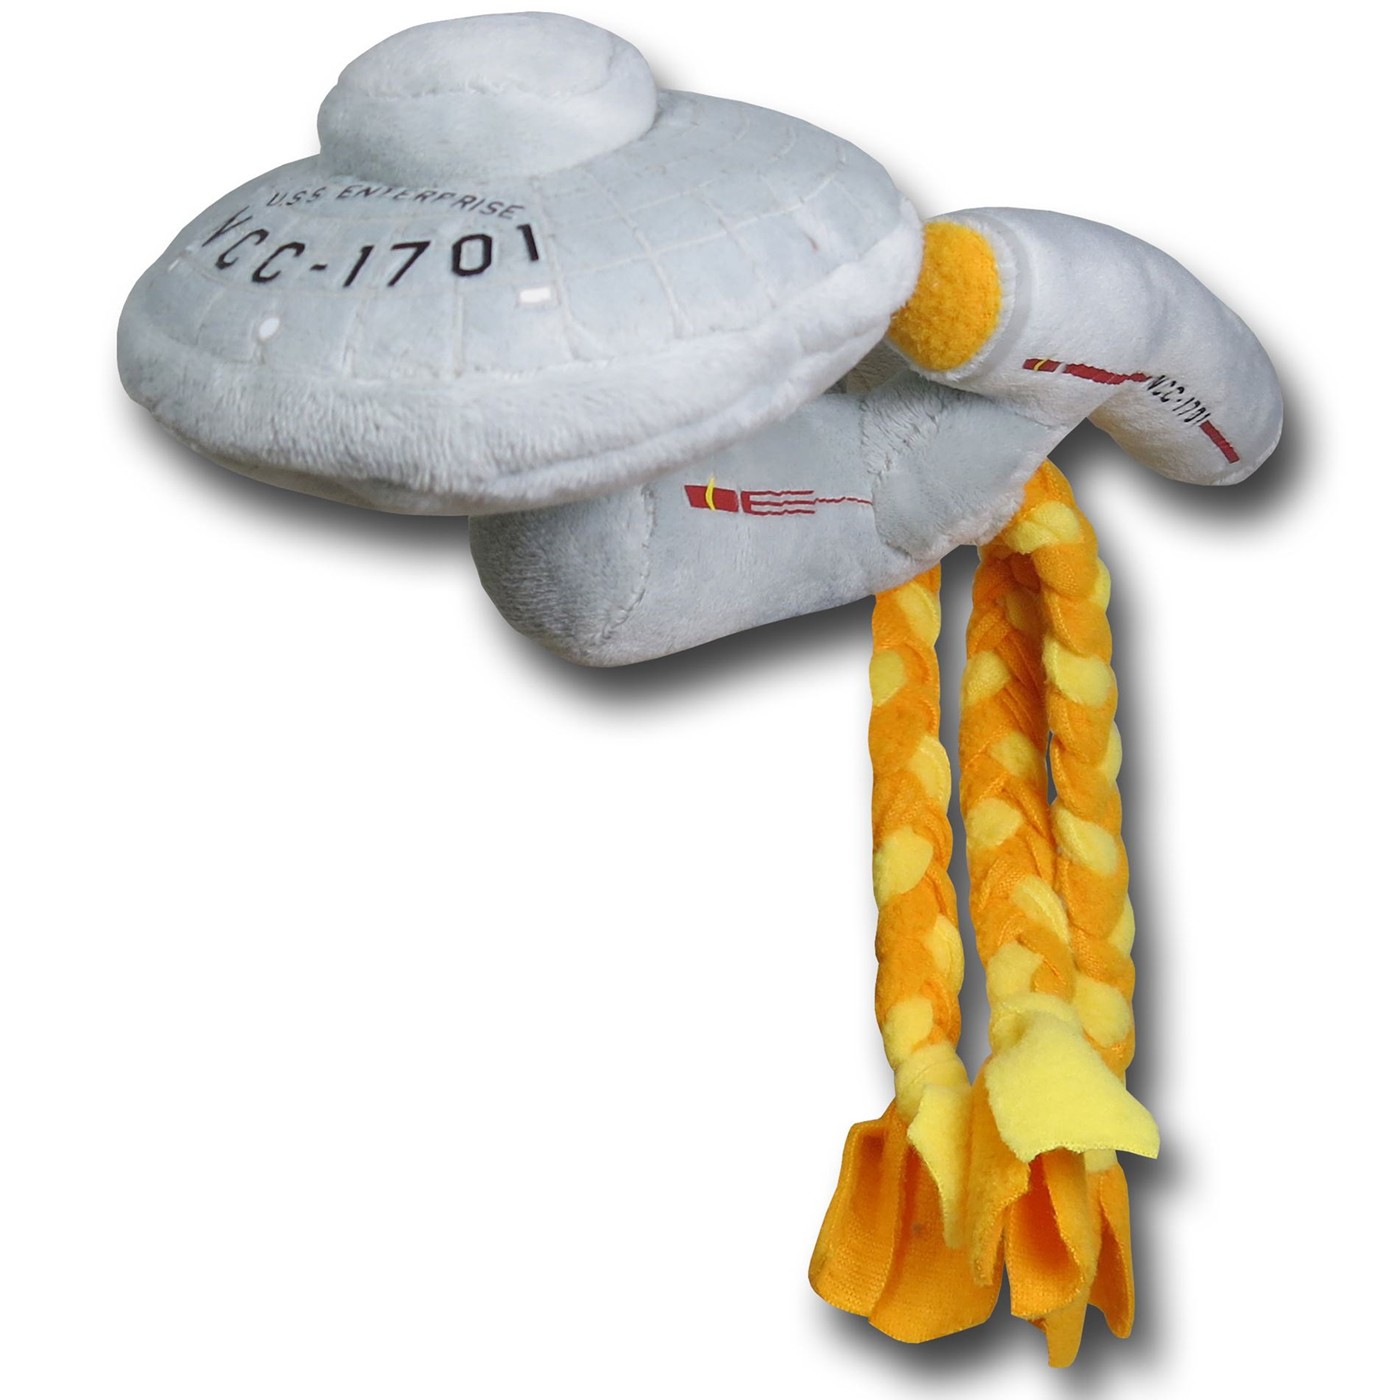 Star Trek Enterprise Dog Chew Toy w/Rope